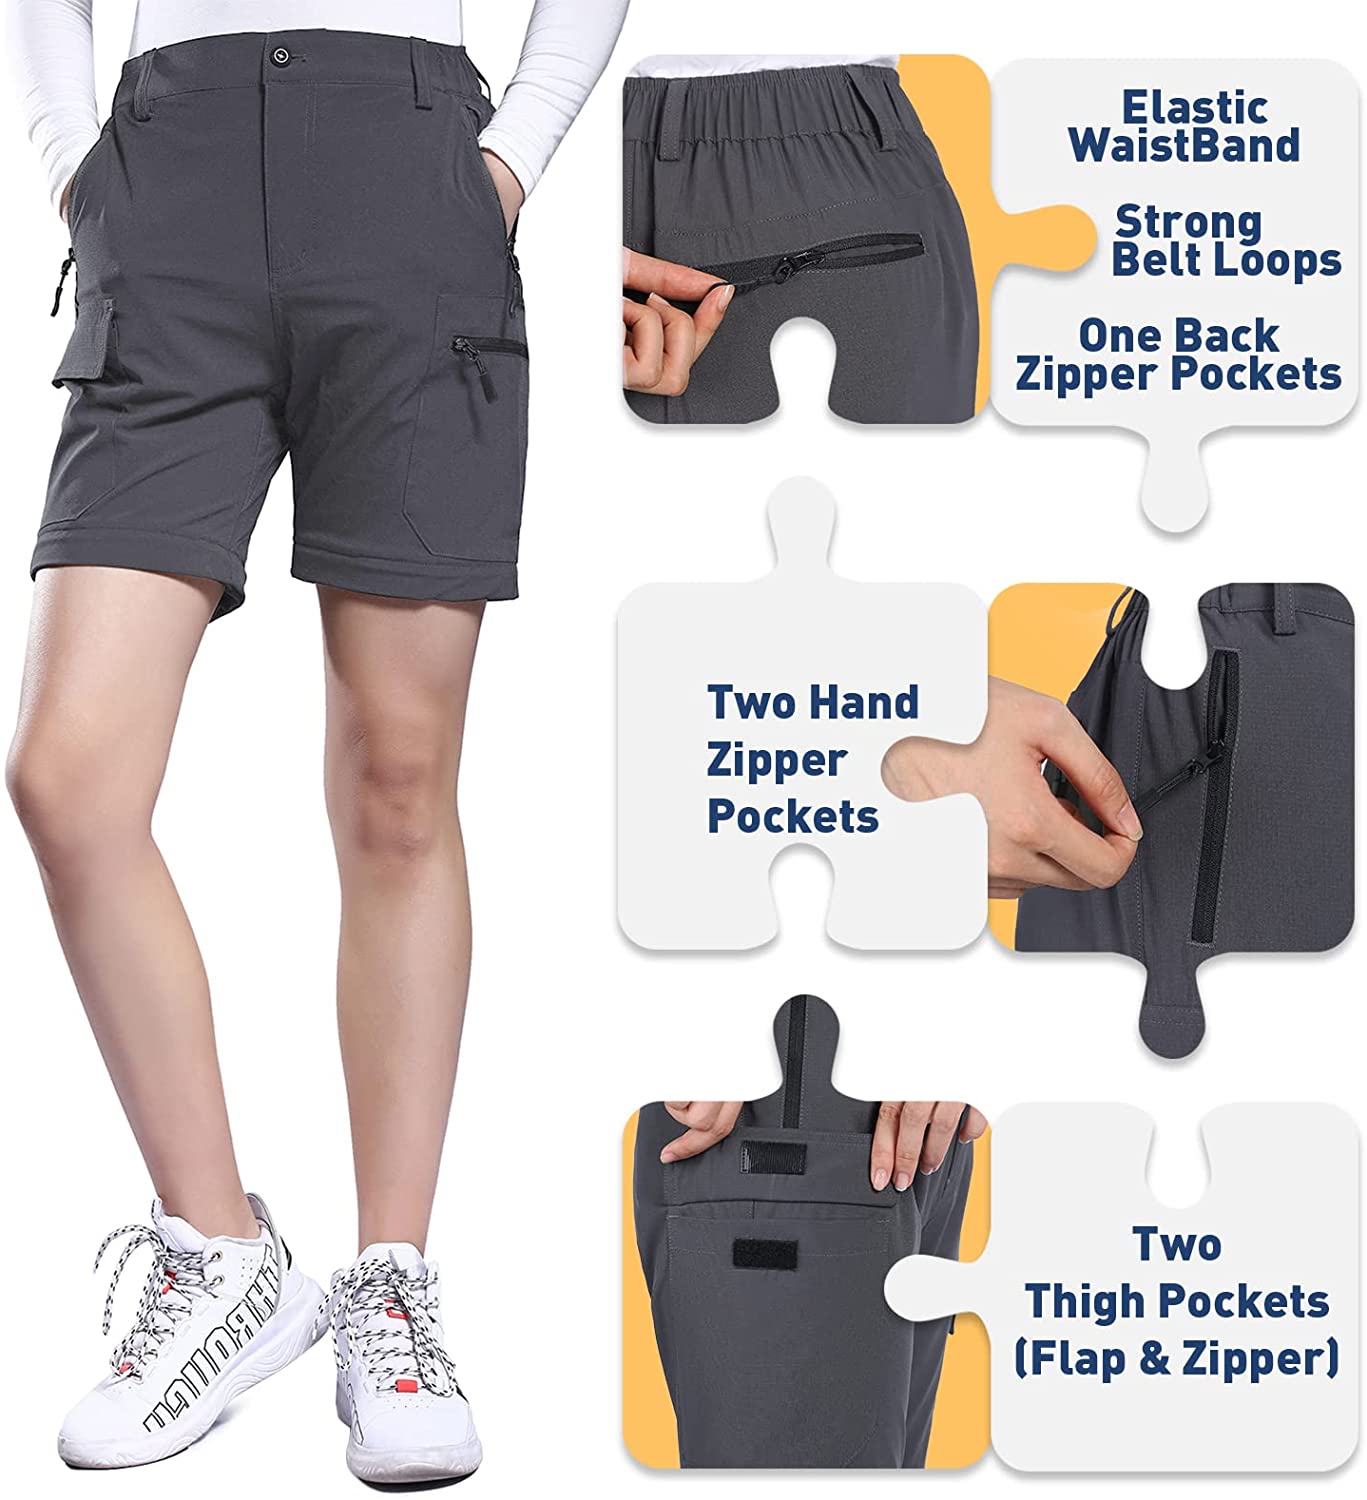 Hiauspor Women's Convertible Hiking Pants Lightweight Zip Off Pants Qu